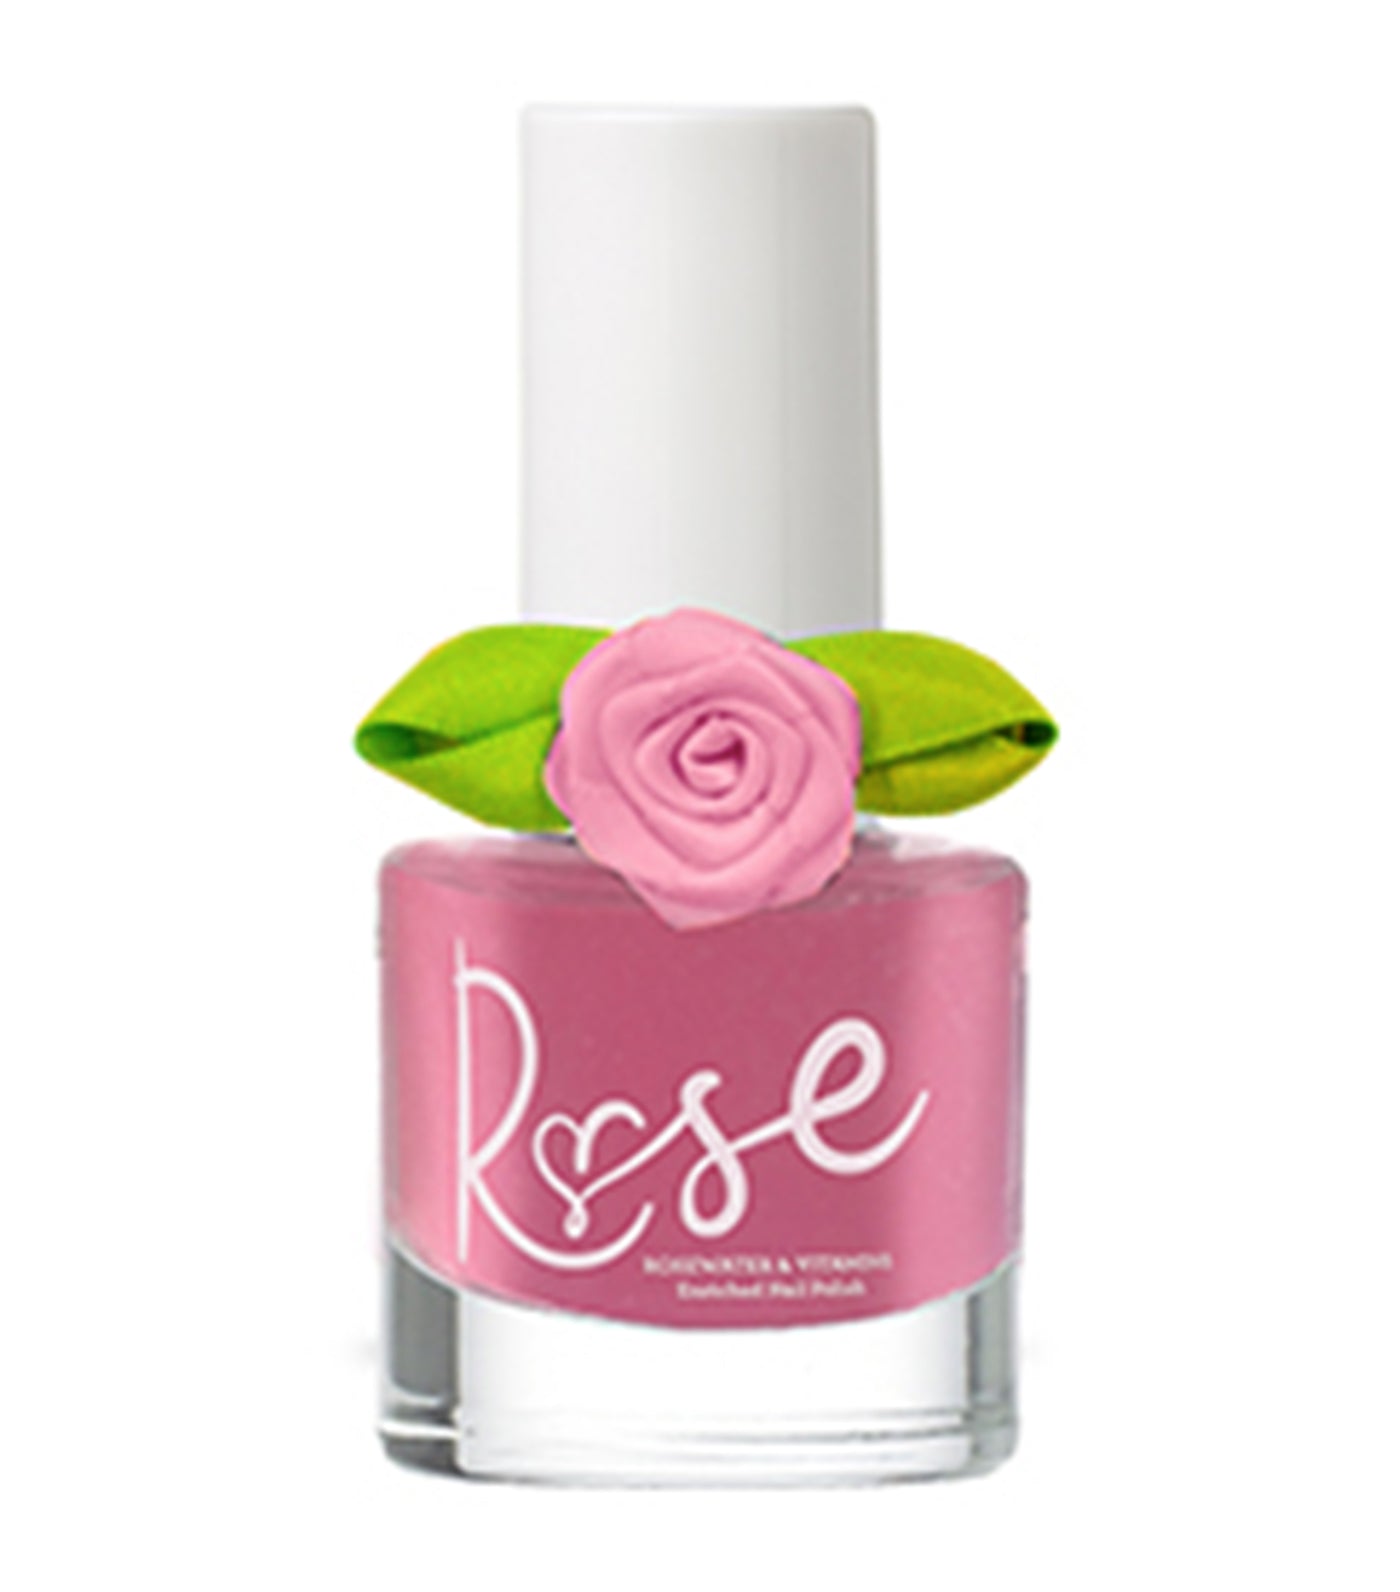 rose pink peel-off nail polish - lol